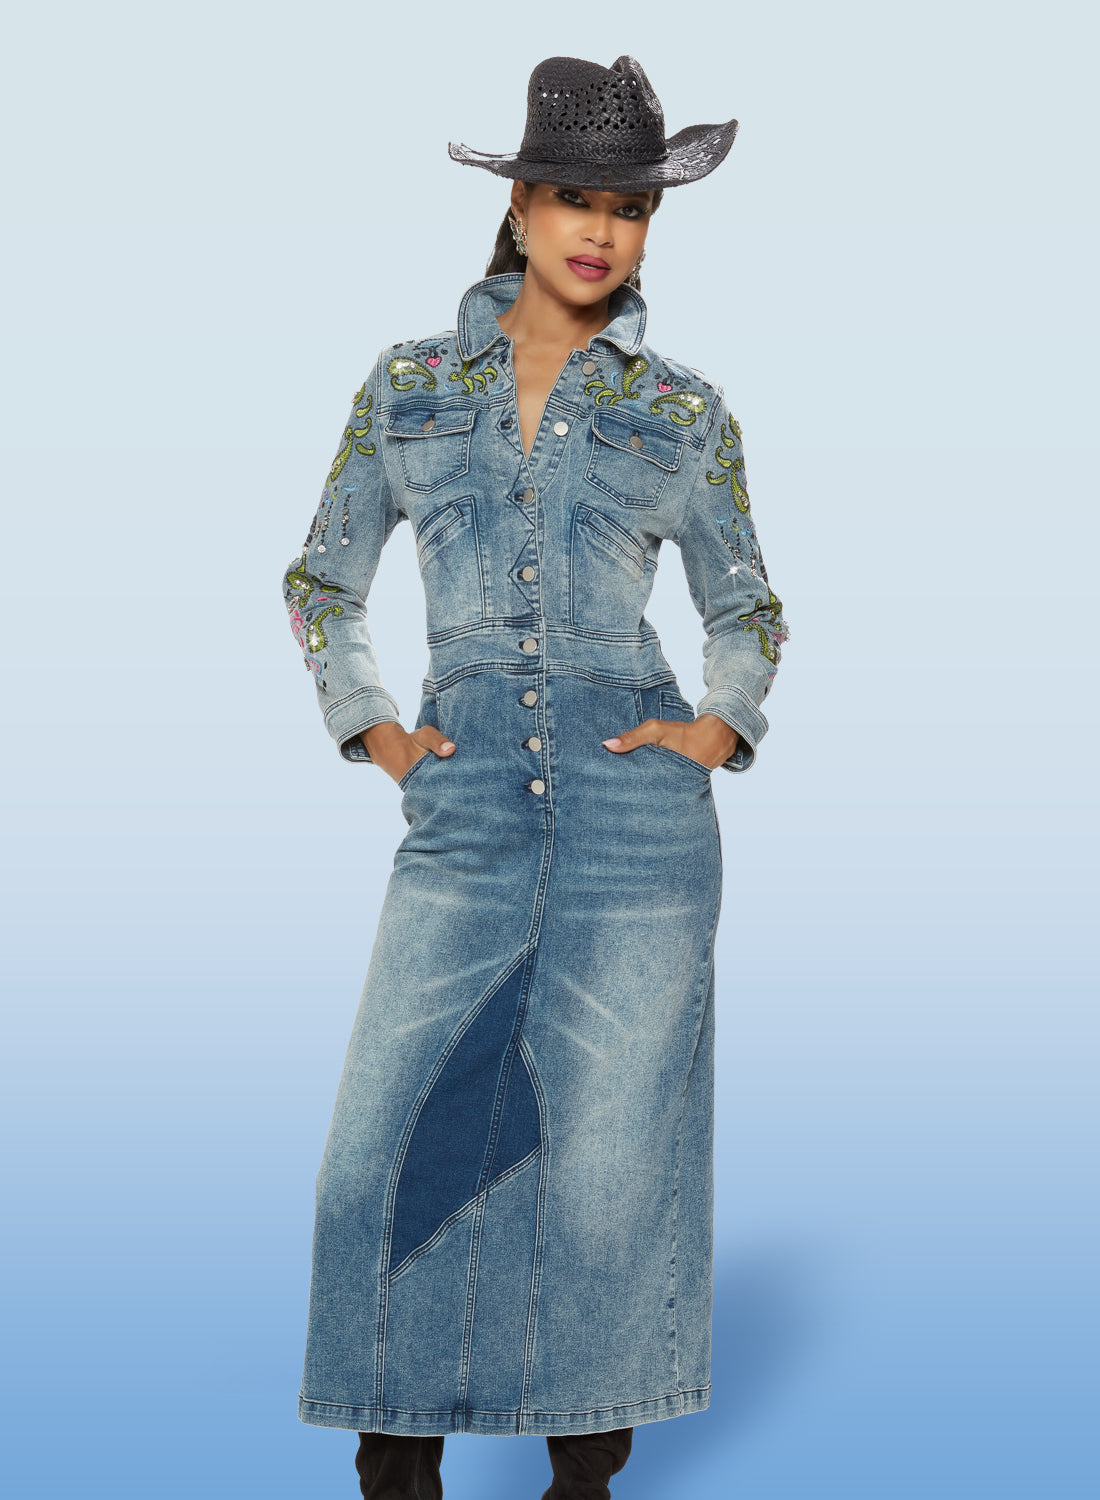 DV Jeans - 8476 - Light Blue Stretch Denim Embroidered Trim Dress